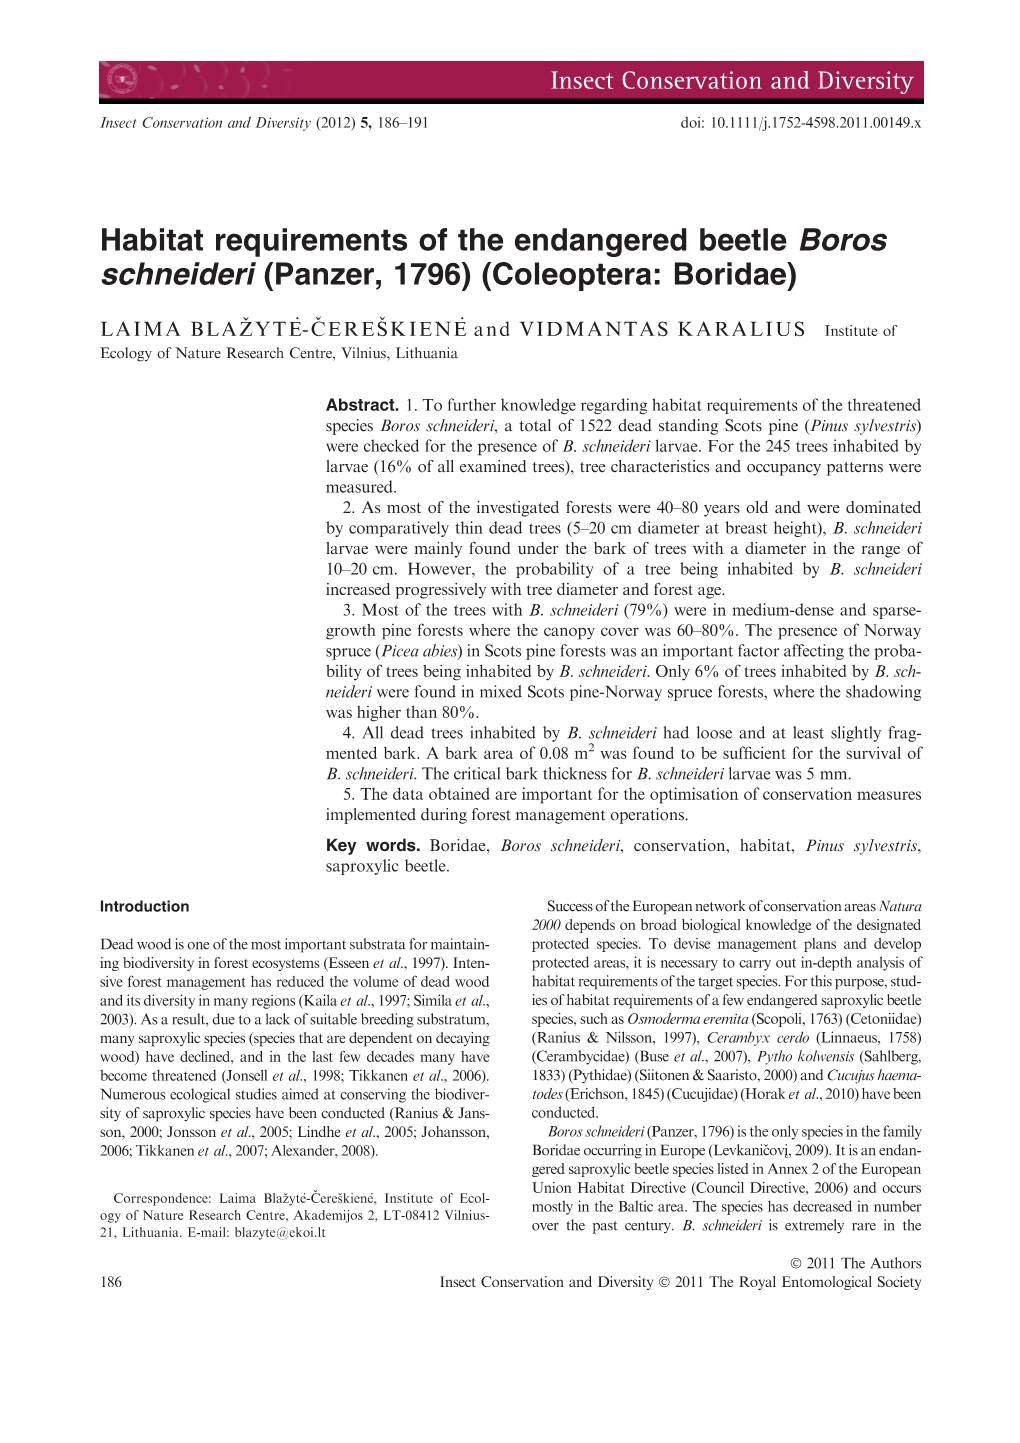 Habitat Requirements of the Endangered Beetle Boros Schneideri